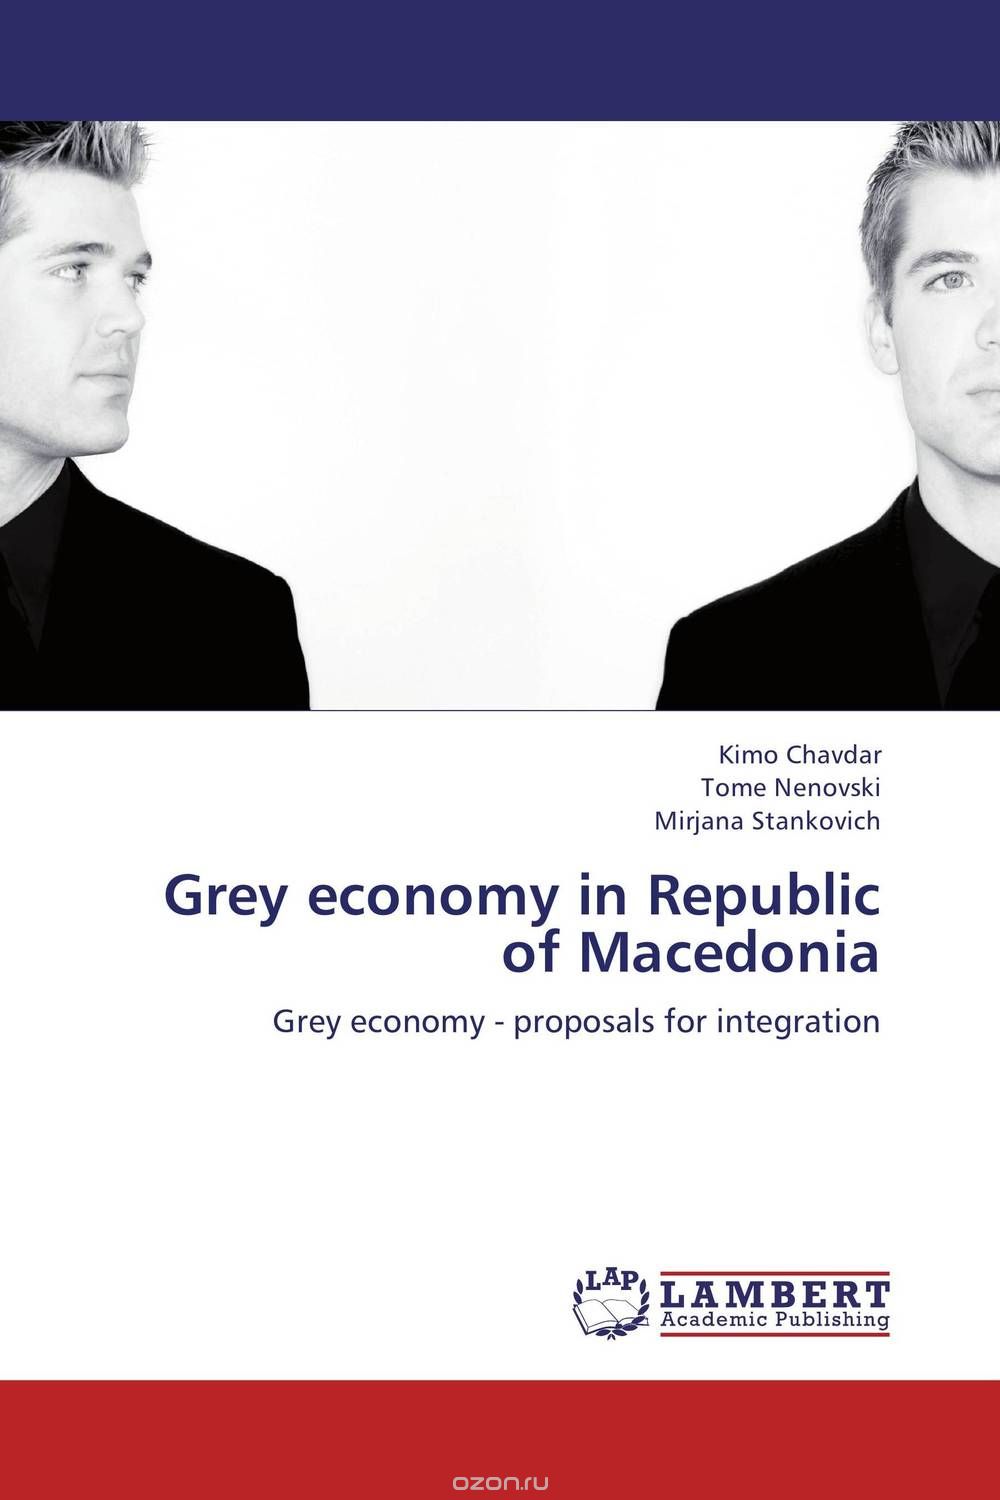 Скачать книгу "Grey economy in Republic of Macedonia"